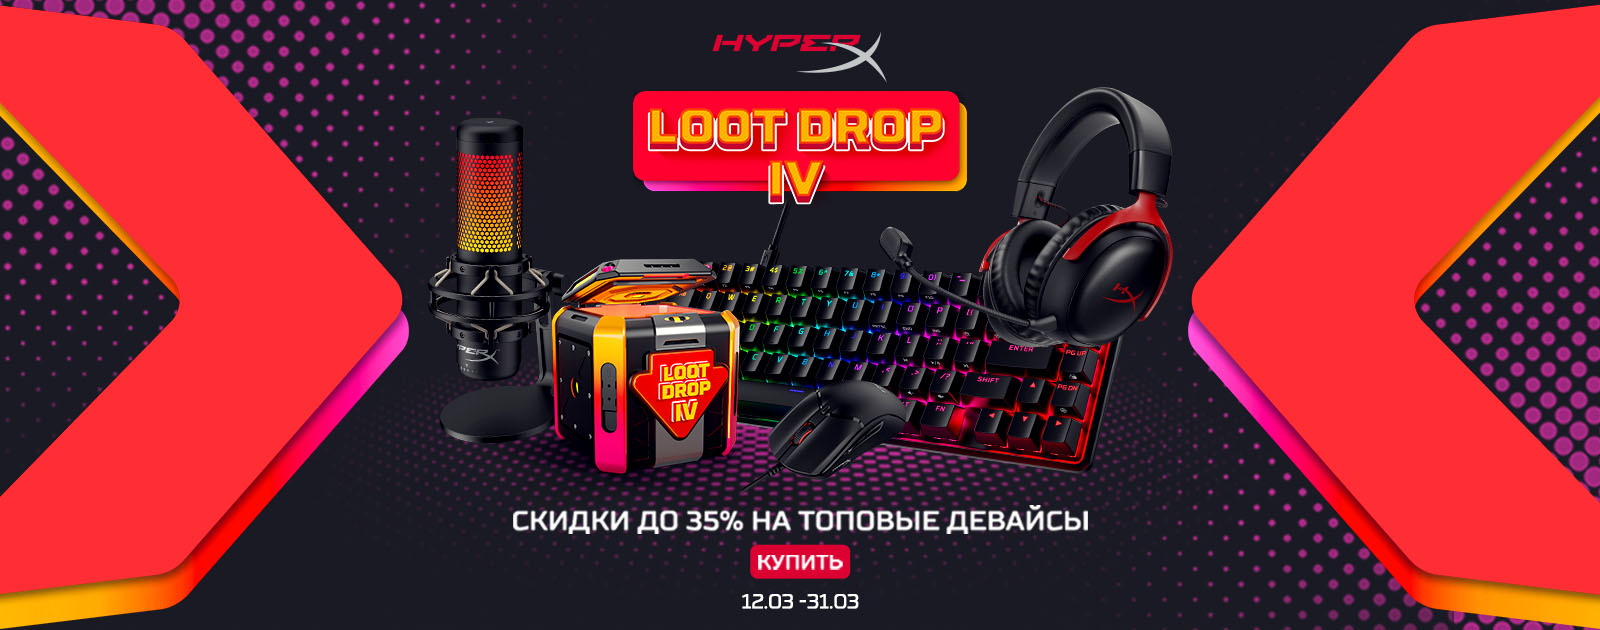 HyperX Loot Drop IV promo